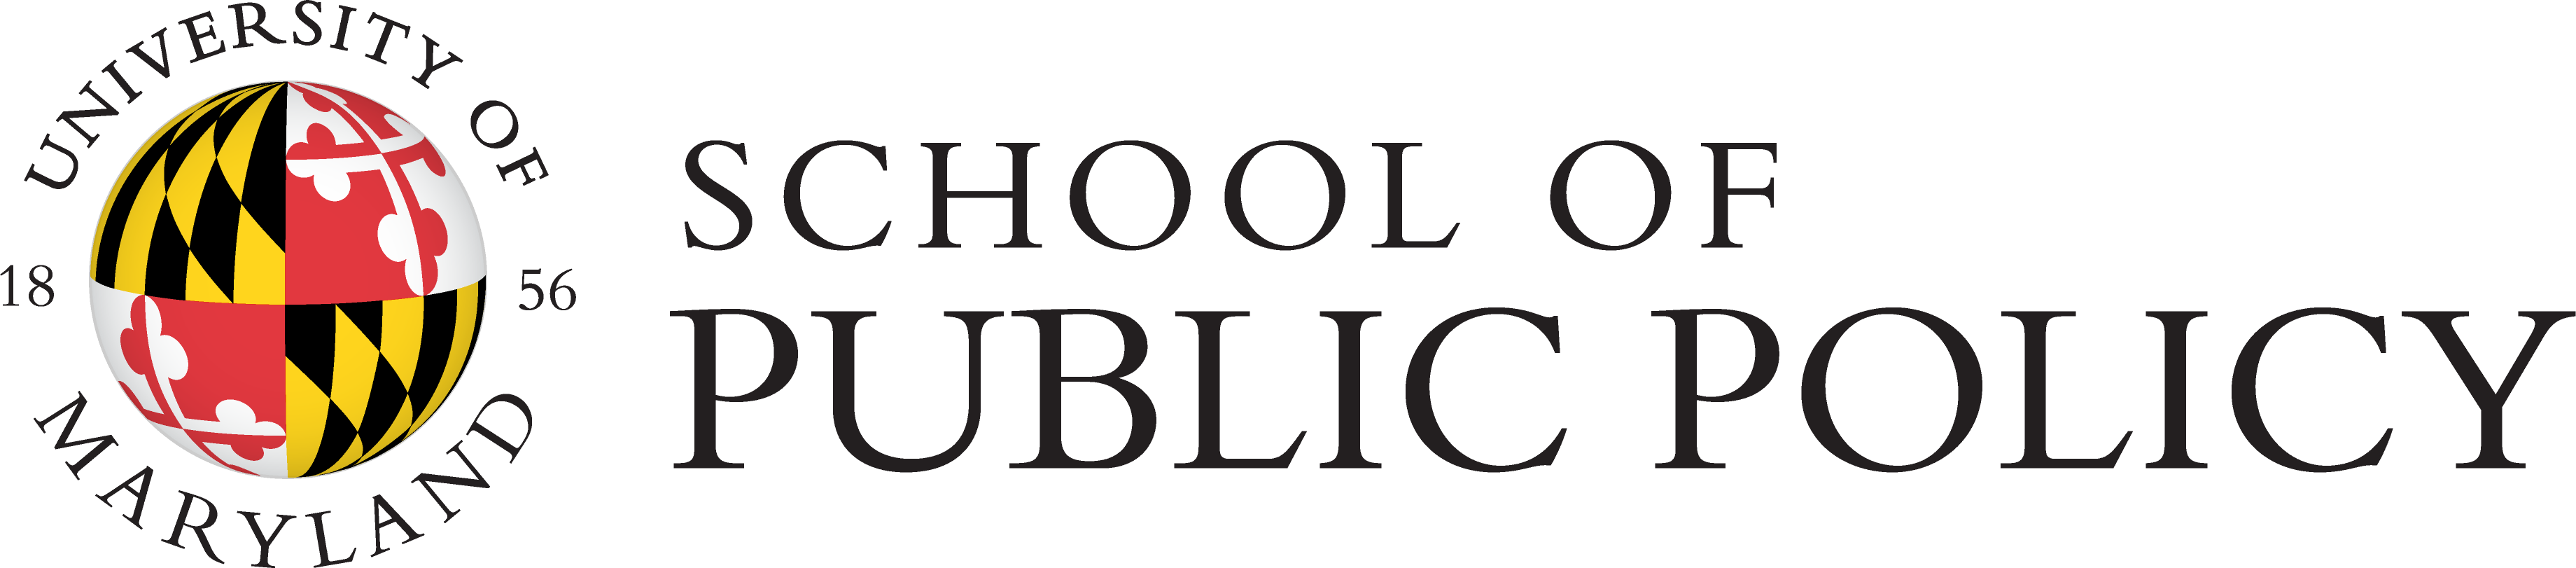 University Of Maryland School of Public Policy Logo